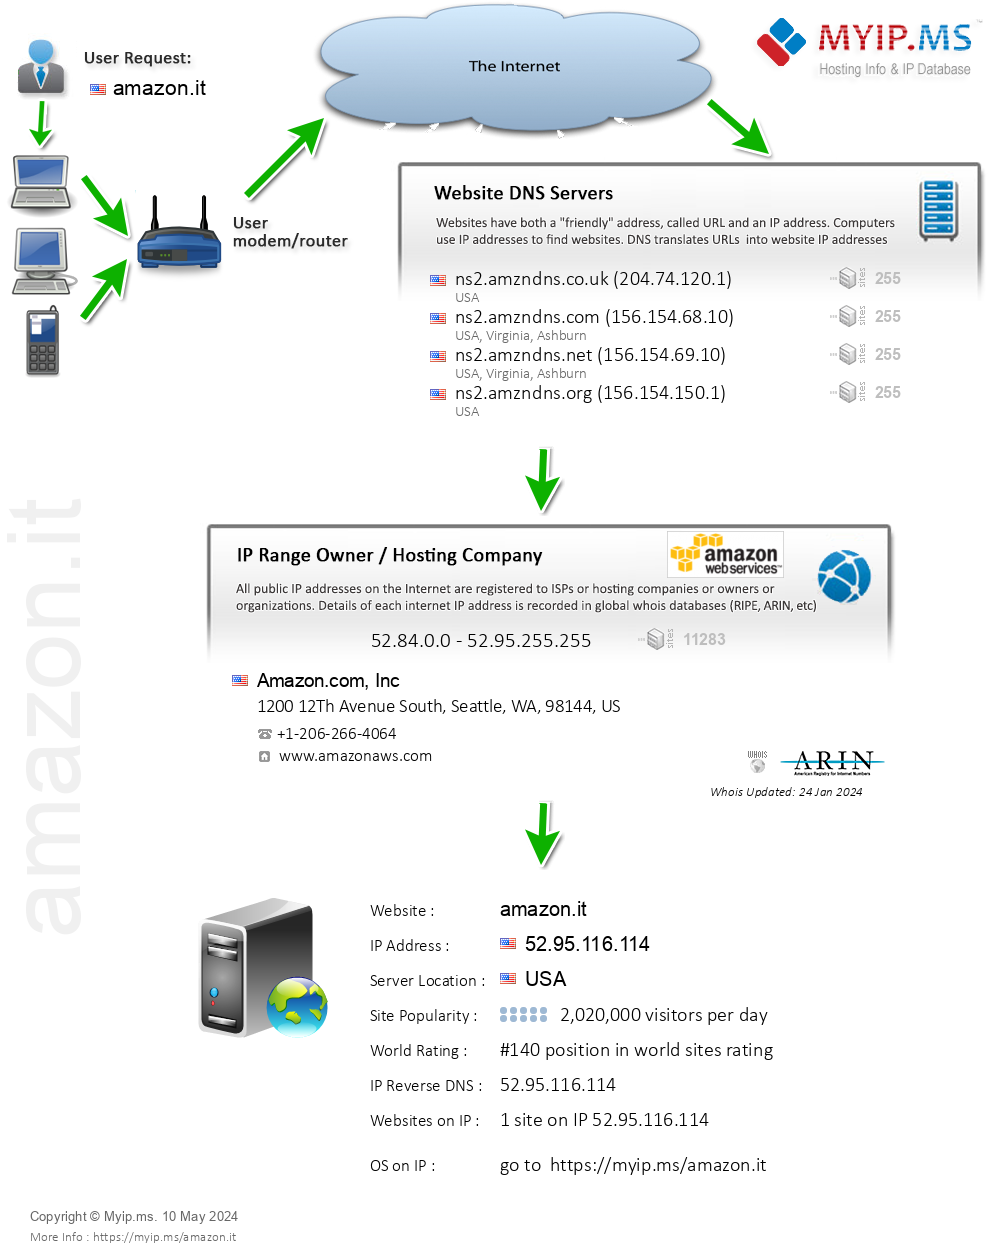 Amazon.it - Website Hosting Visual IP Diagram